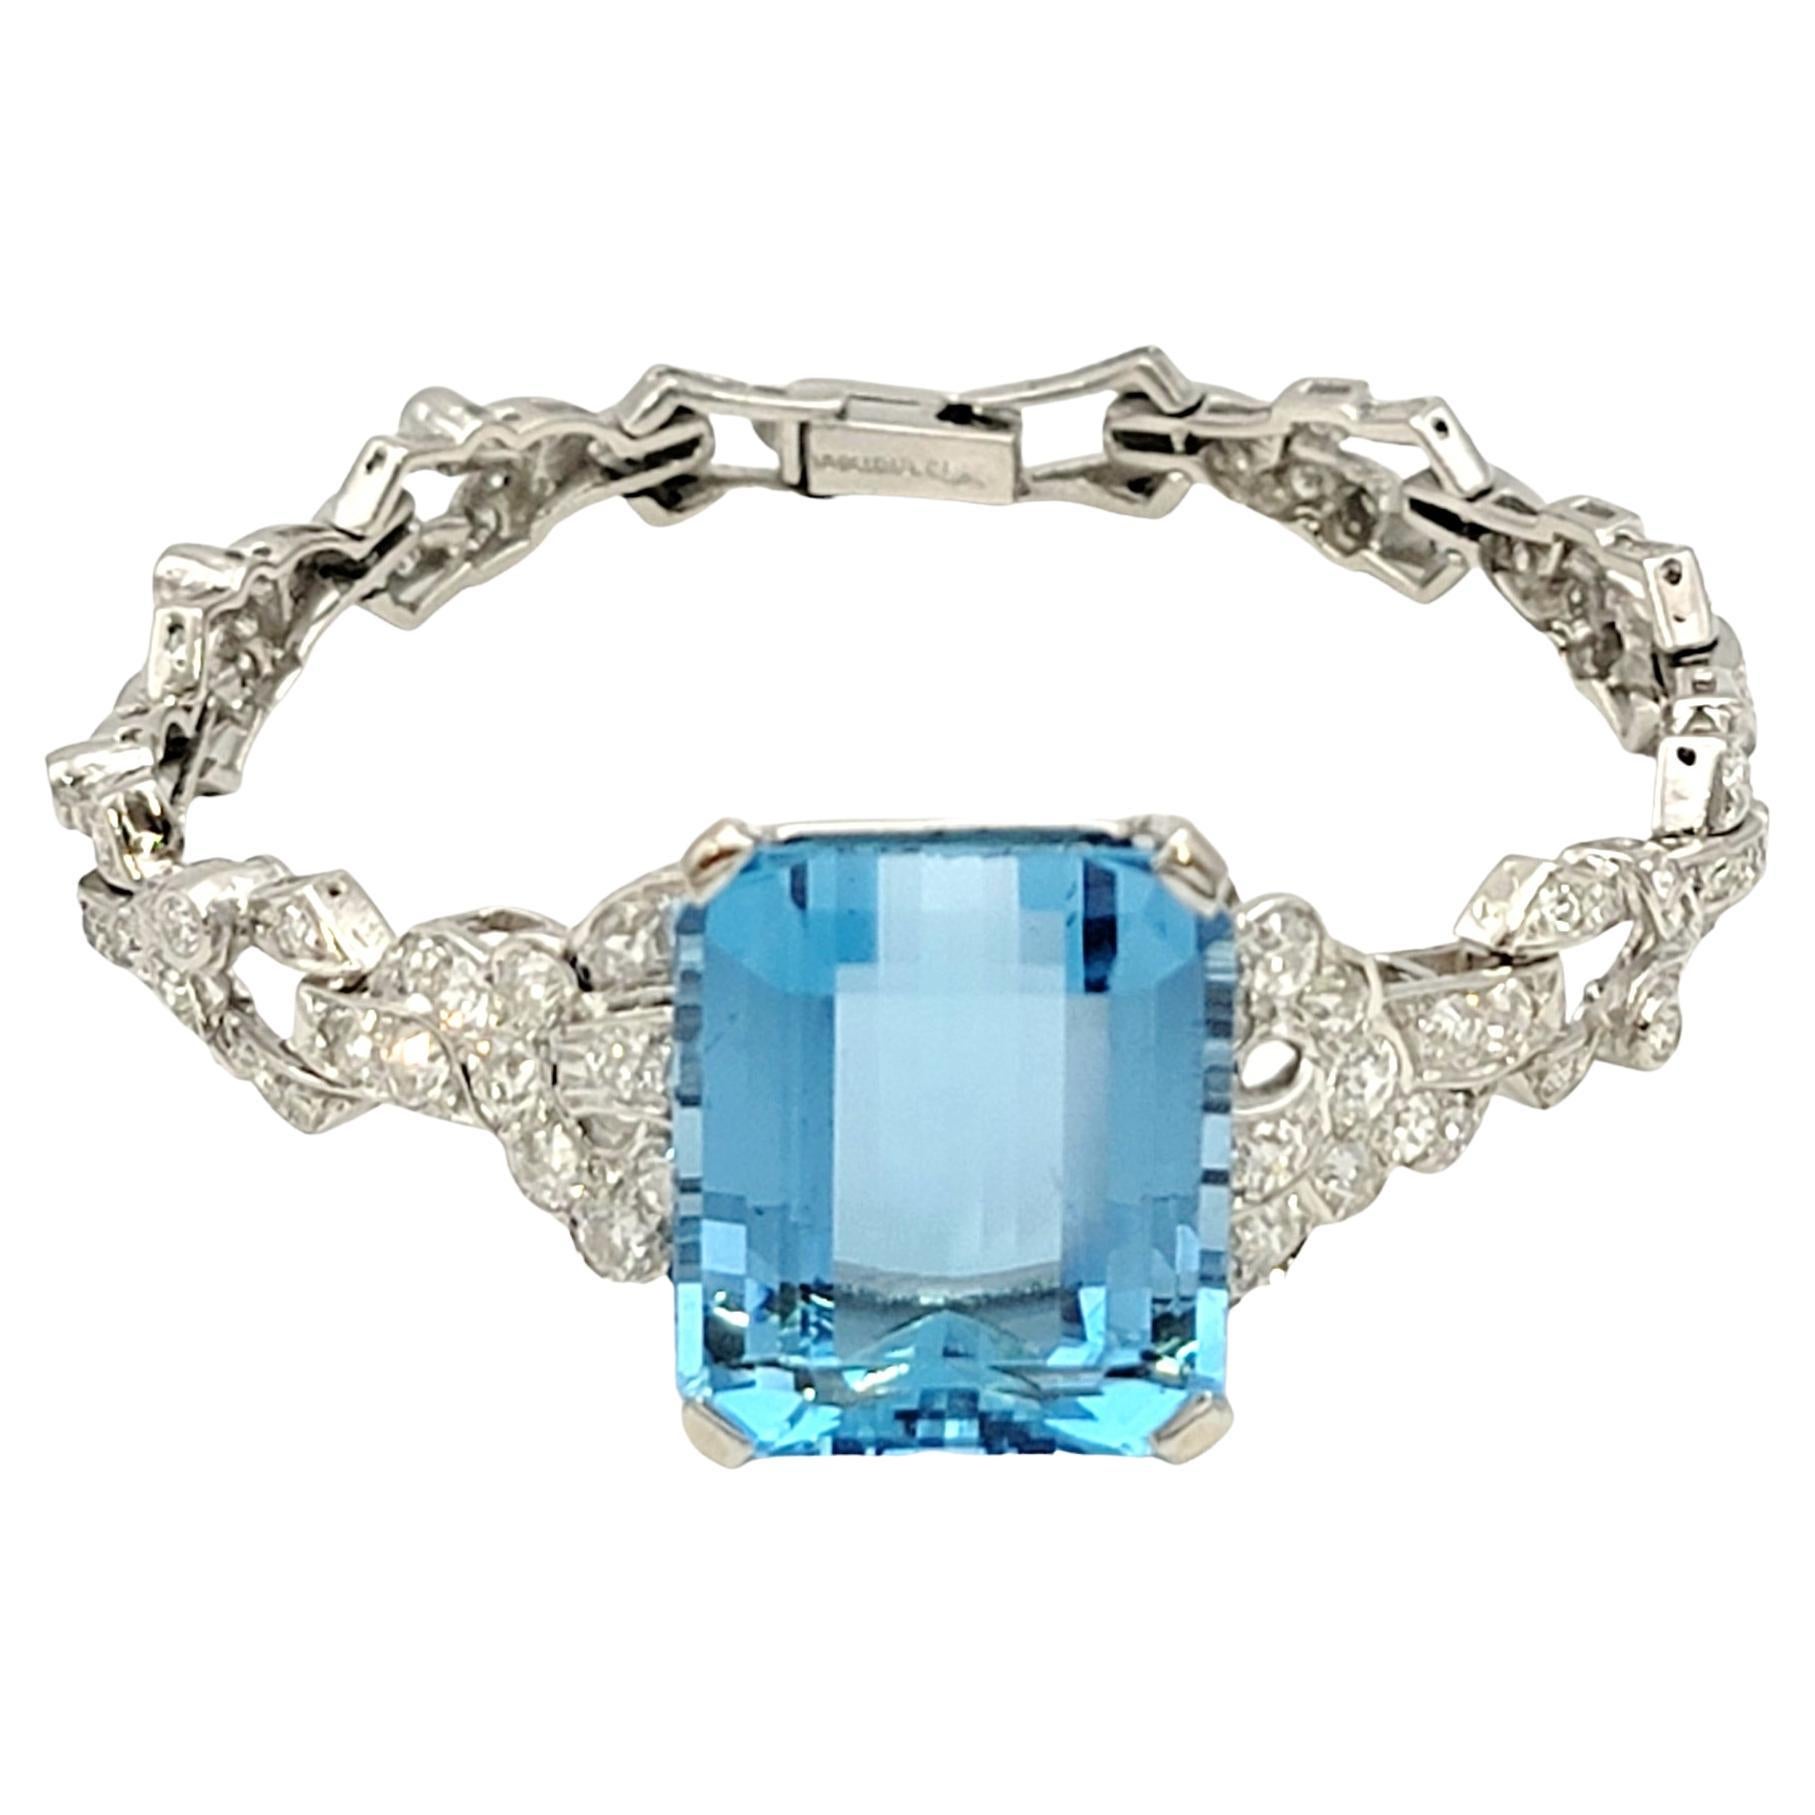 Vintage 25.76 Carat Total Blue Aquamarine and Diamond Bracelet in Platinum For Sale